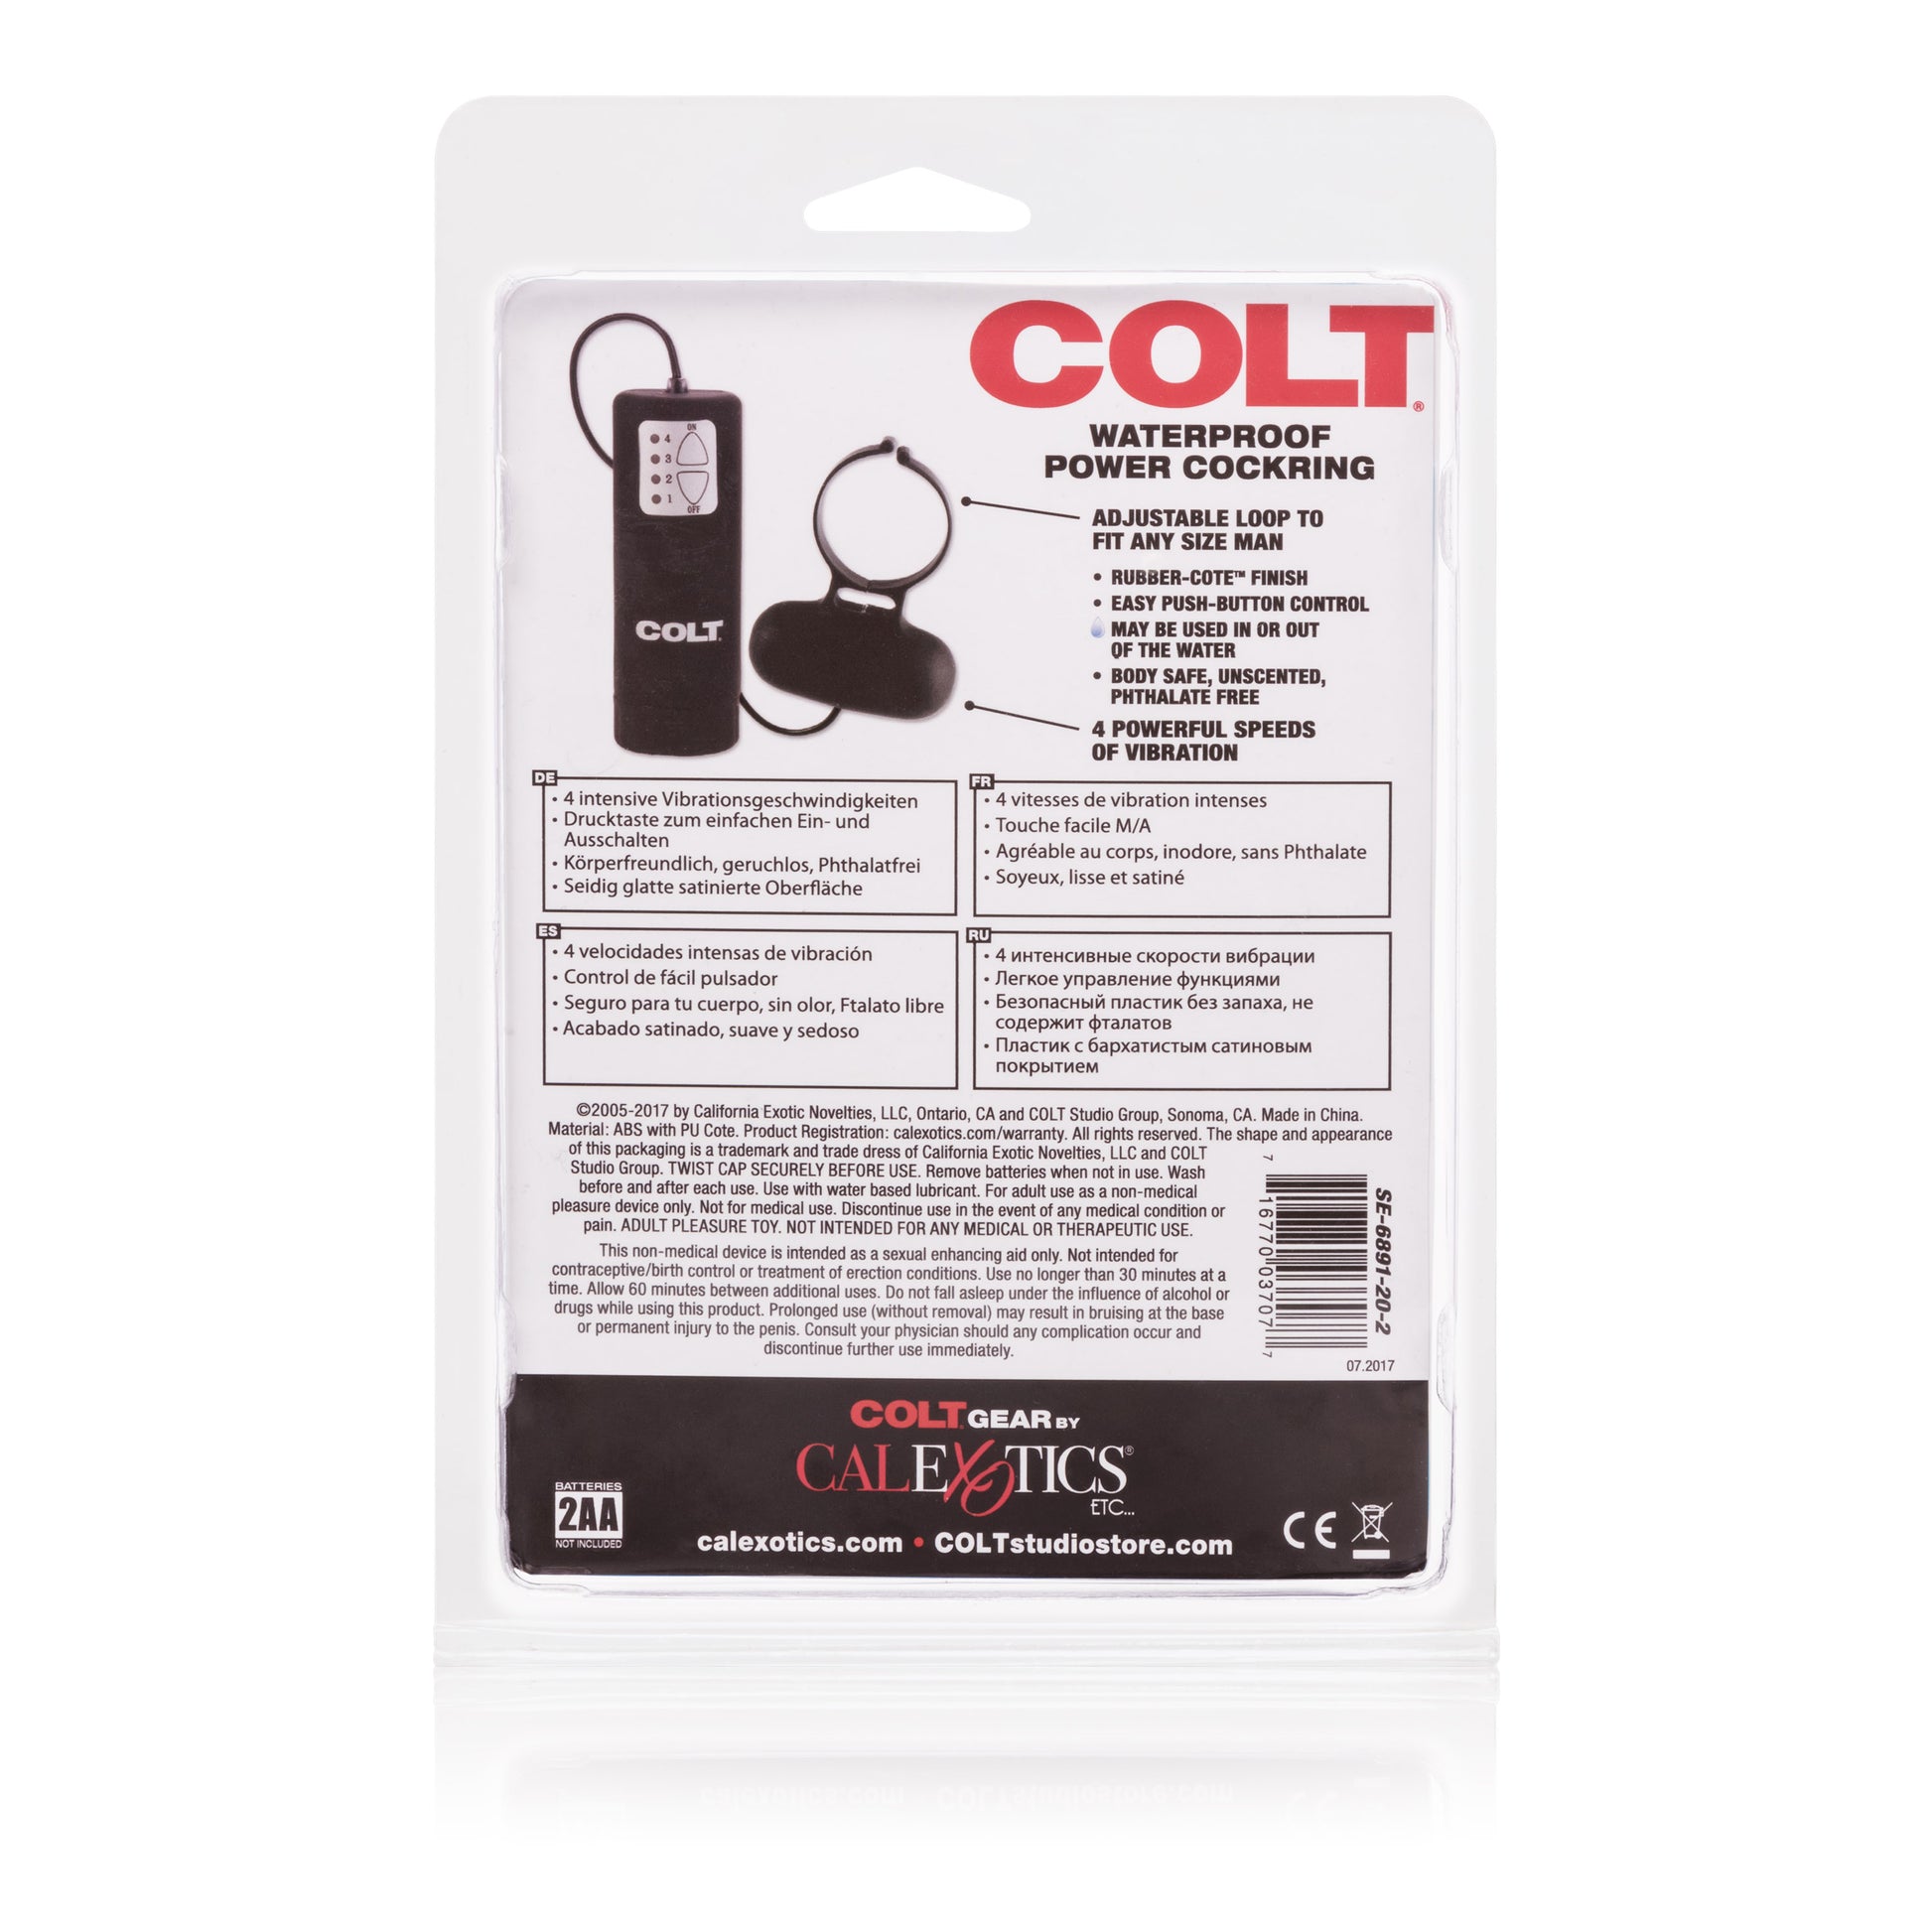 Colt Wp Power Cockring SE6891202